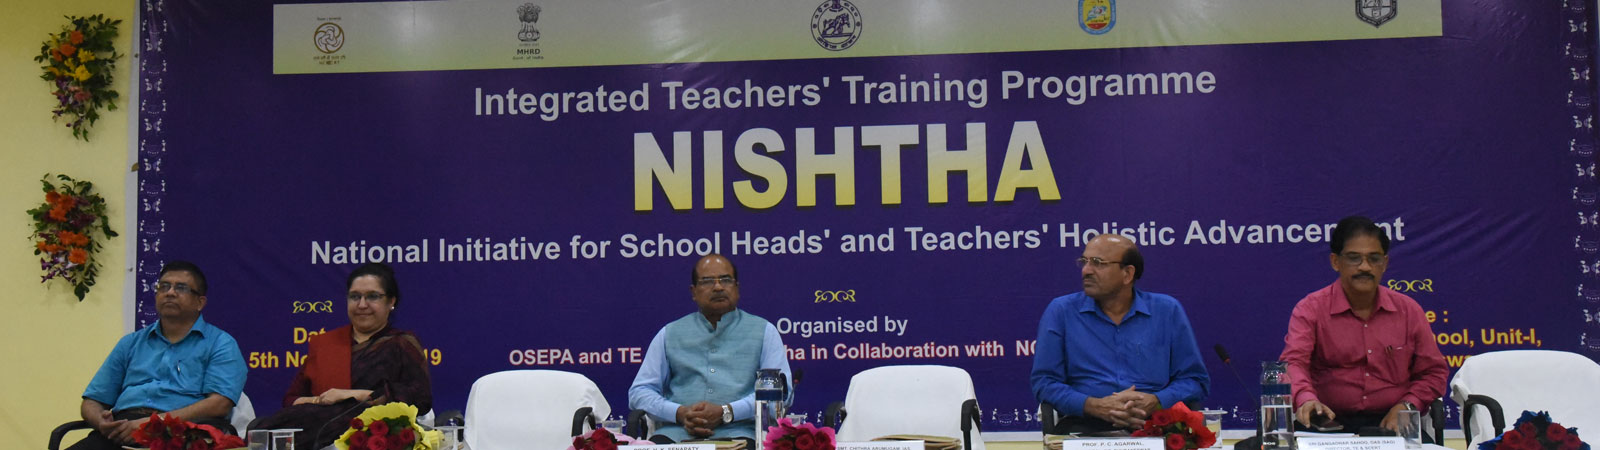 Integrated Teachers' Training Programme  NISHTHA